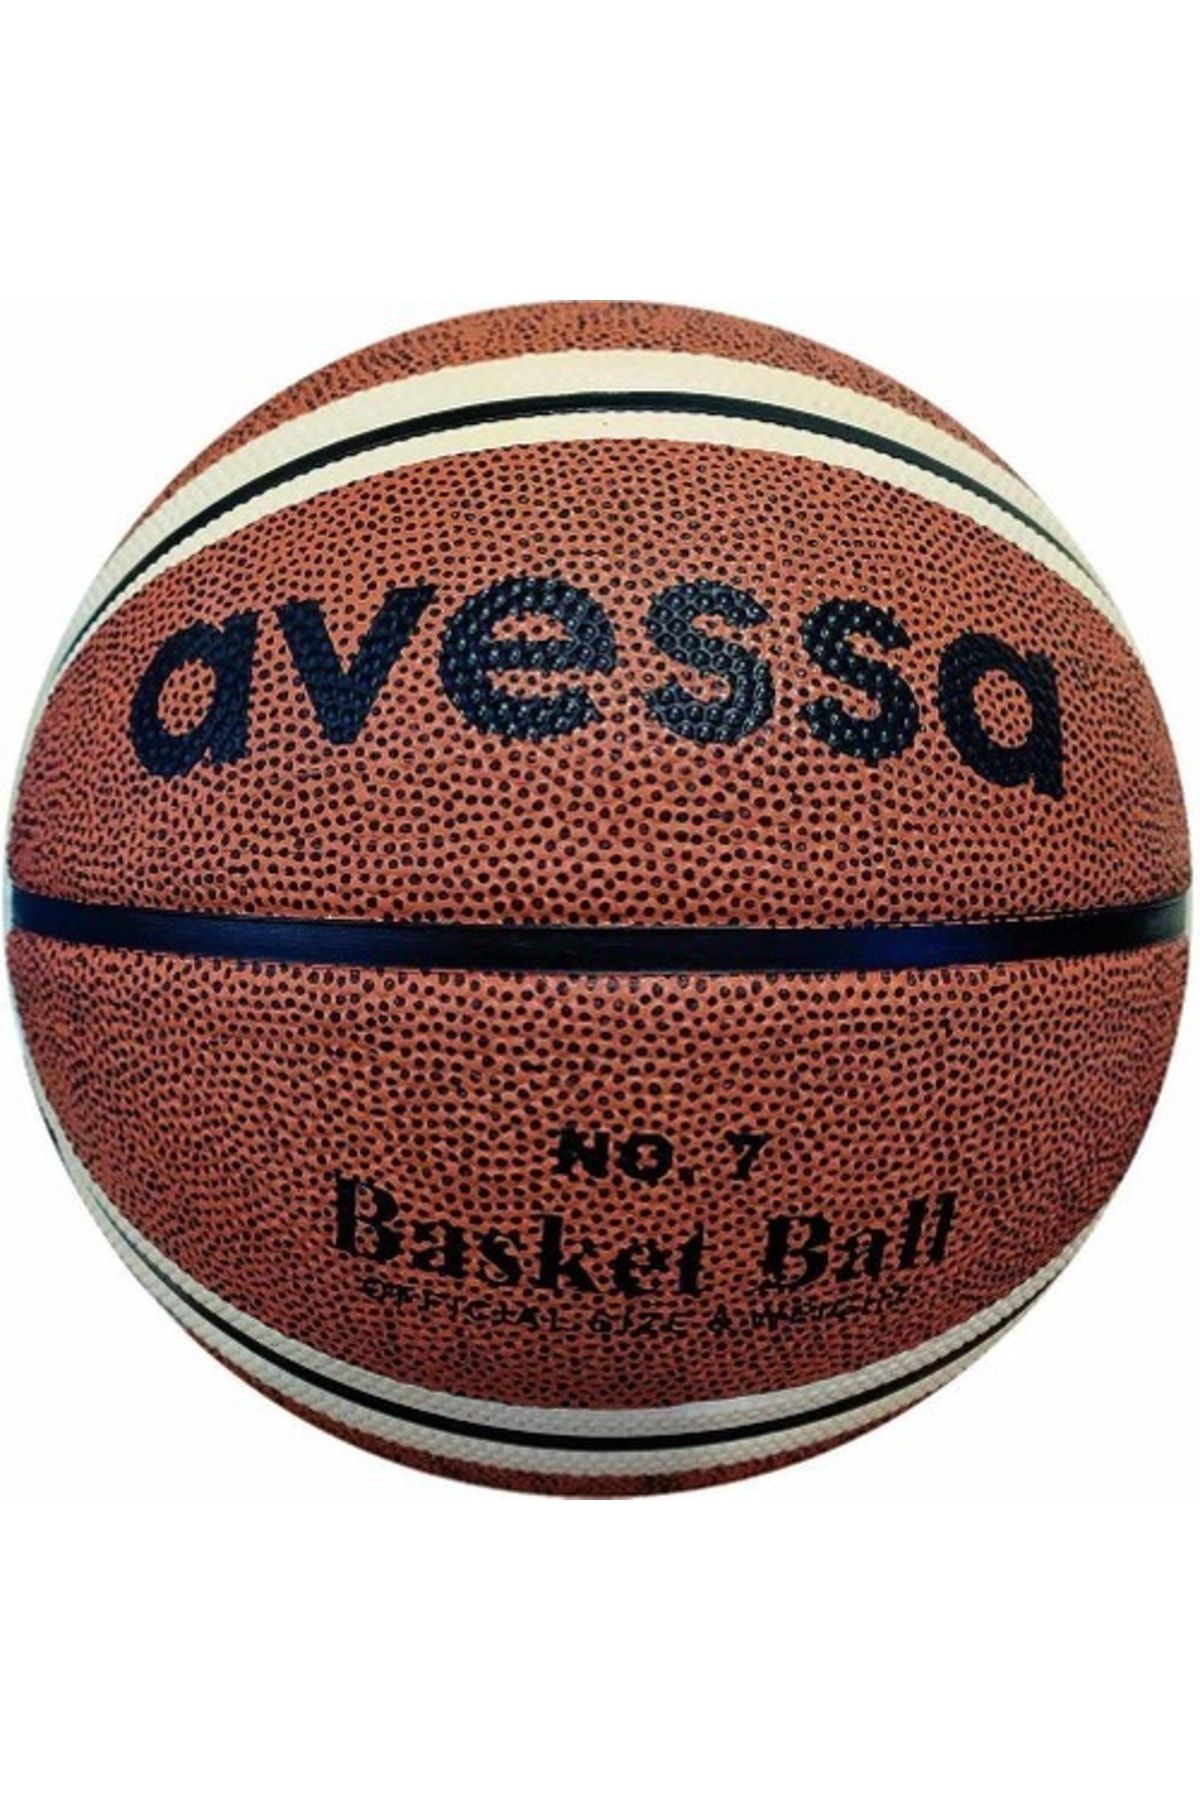 Avessa Profesyonel Basketbol Topu No7 Bt-170